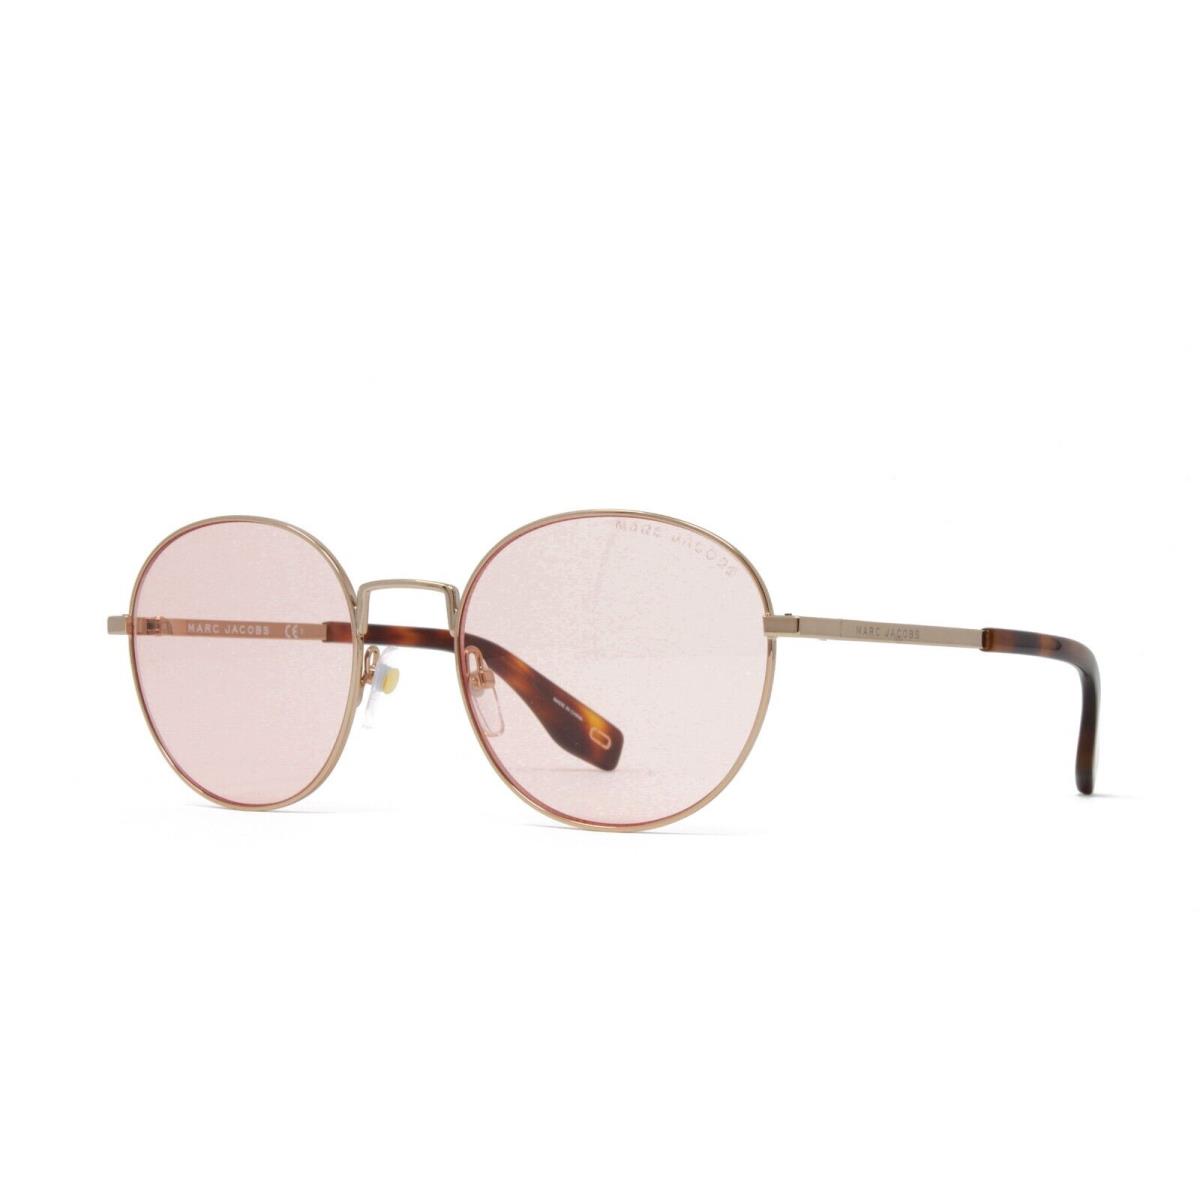 Marc Jacobs Round Men`s Sunglasses MJ272S Color 1N5 Coral Size 53mm - Frame: Gold, Lens: